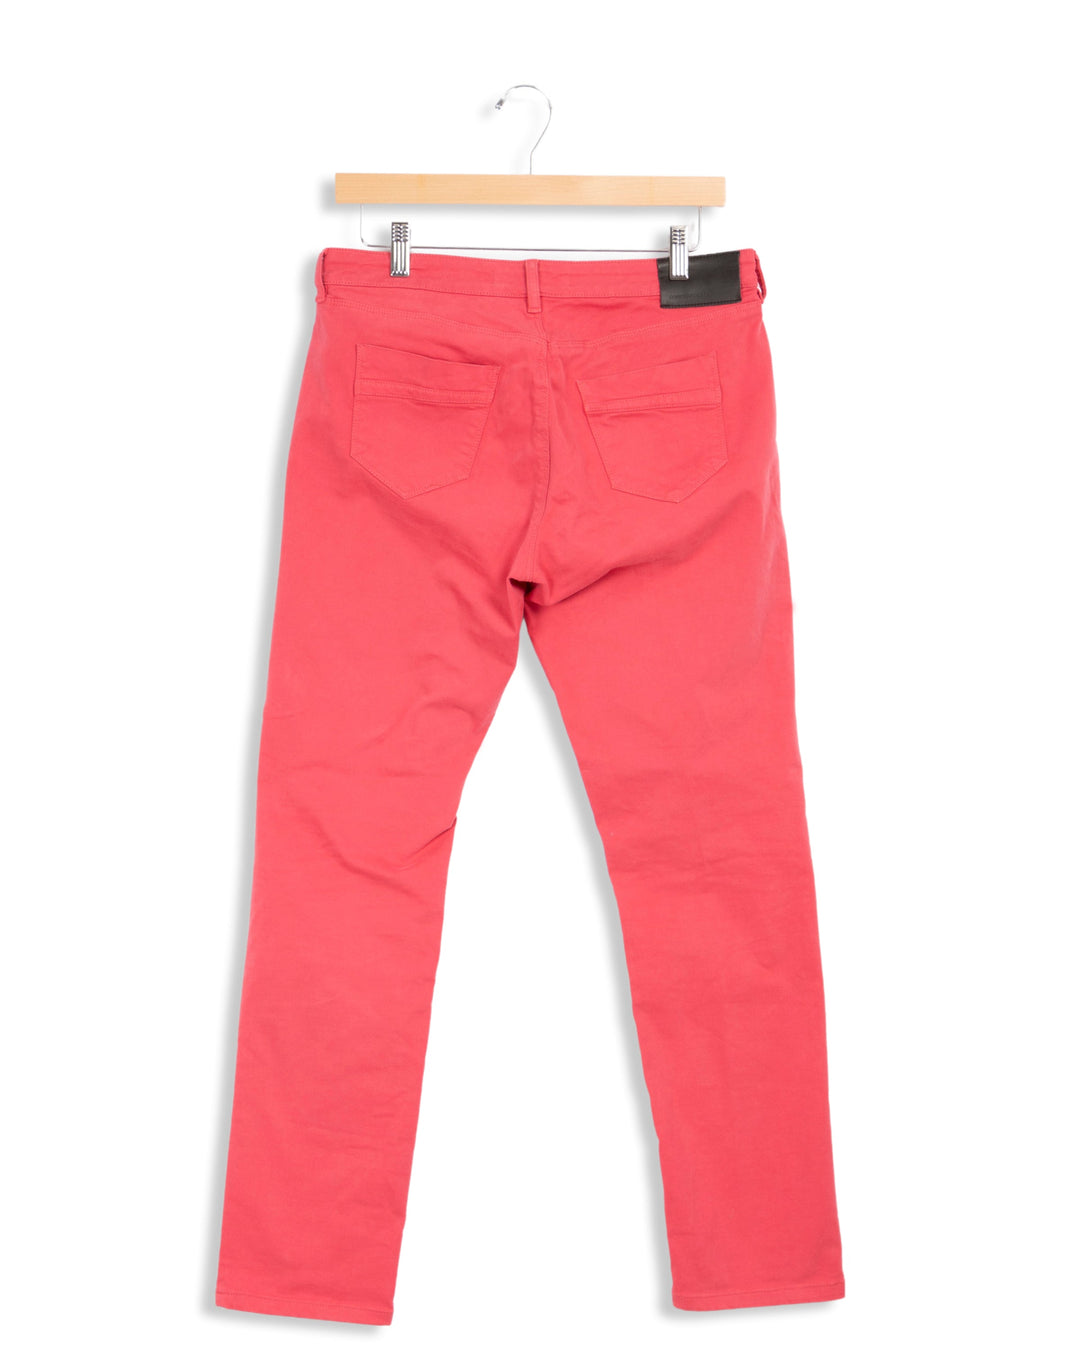 Pink pants - 40